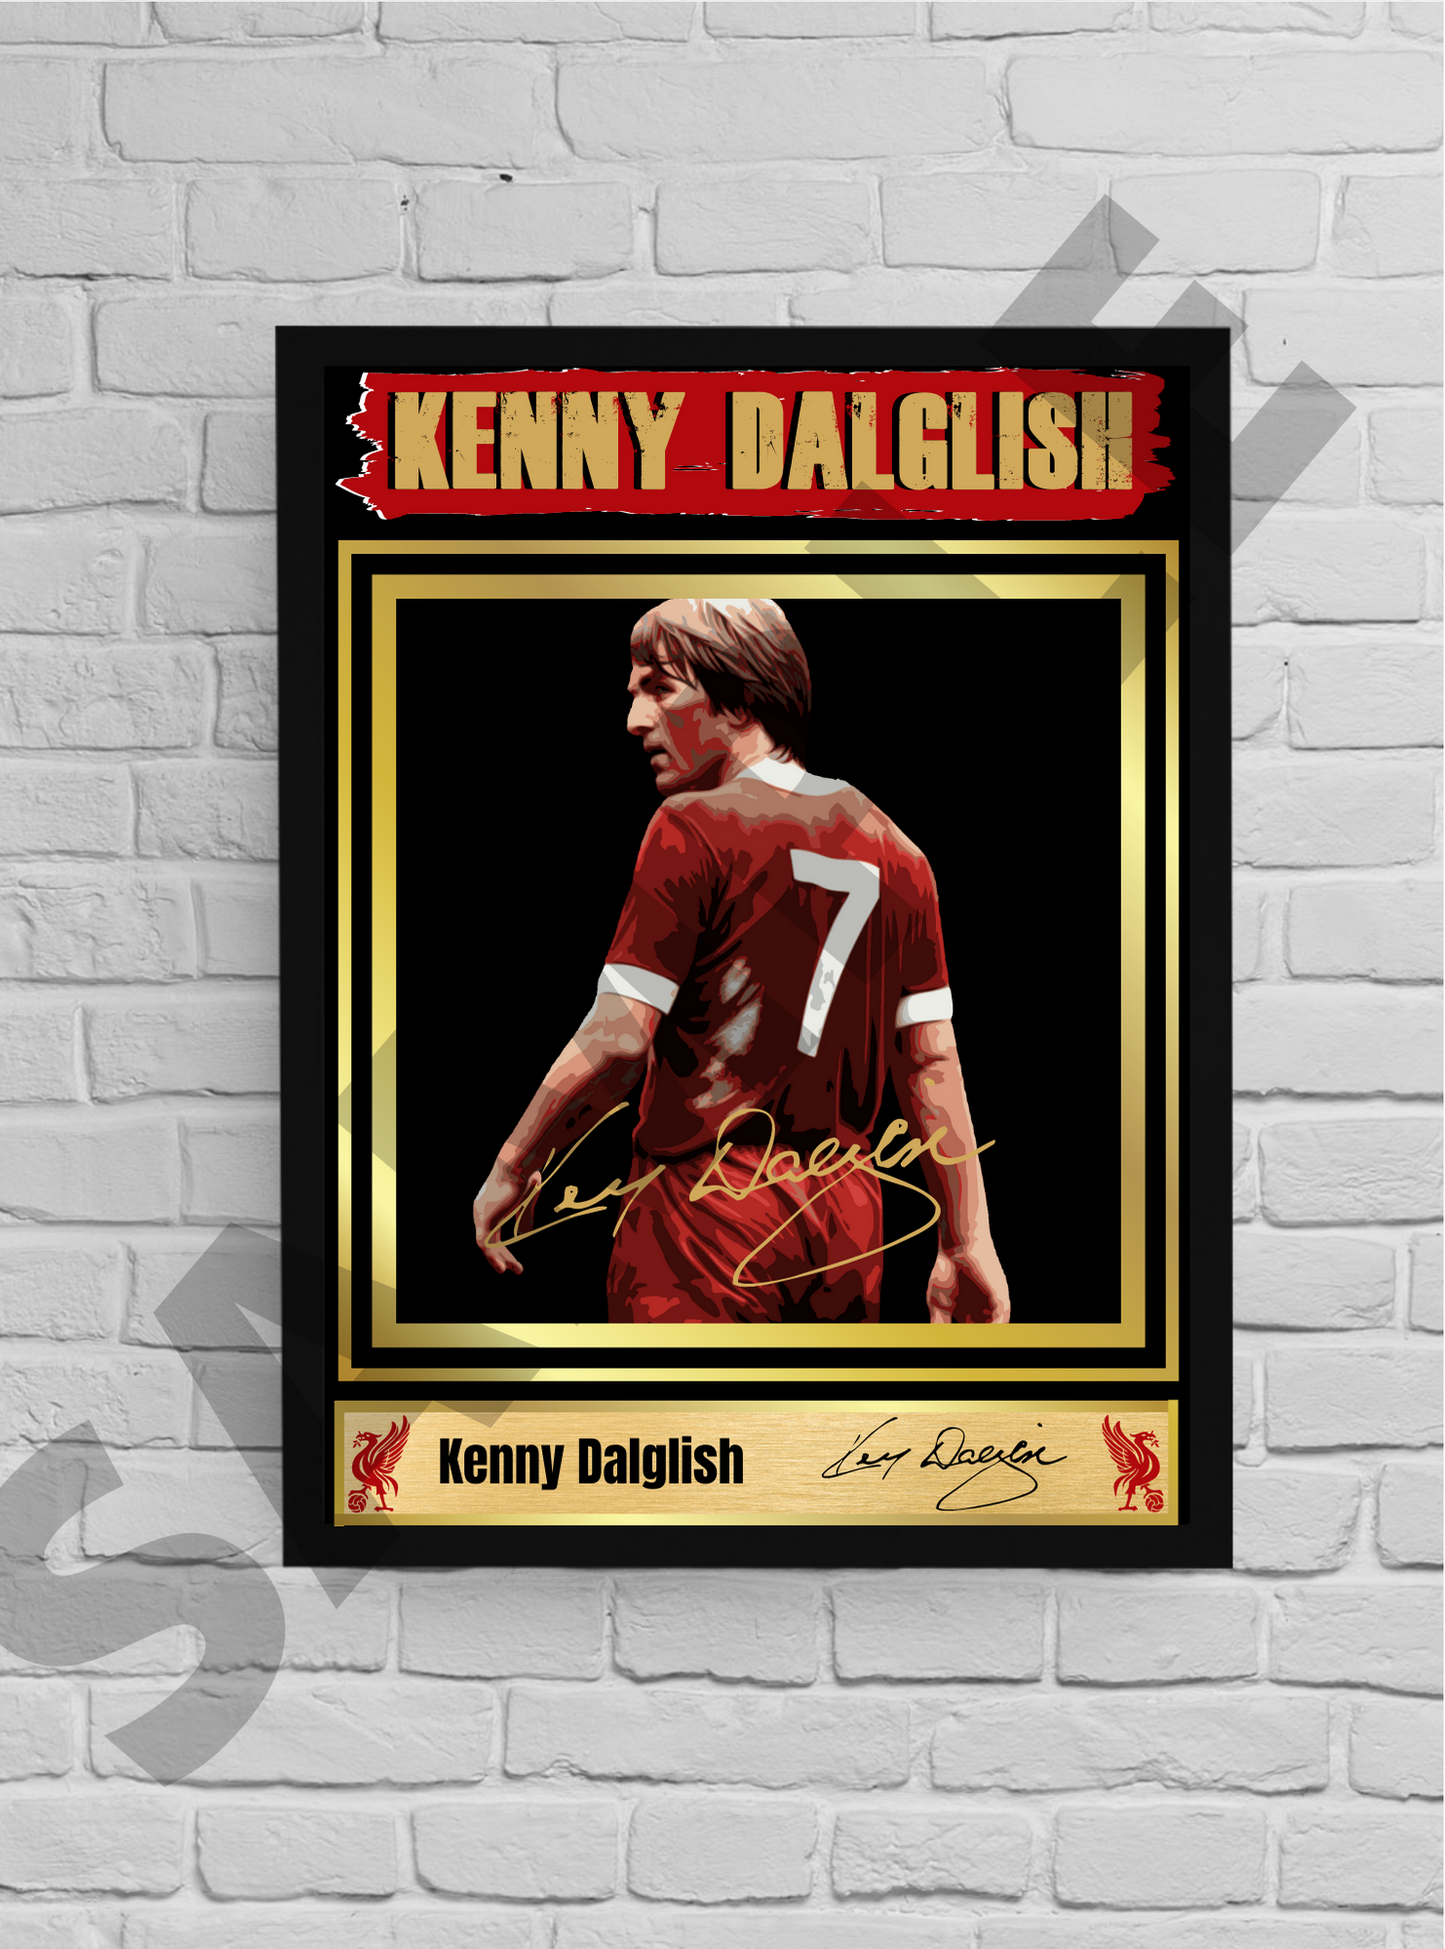 King Kenny Dalglish Liverpool Football memorabilia/collectable signed print 2